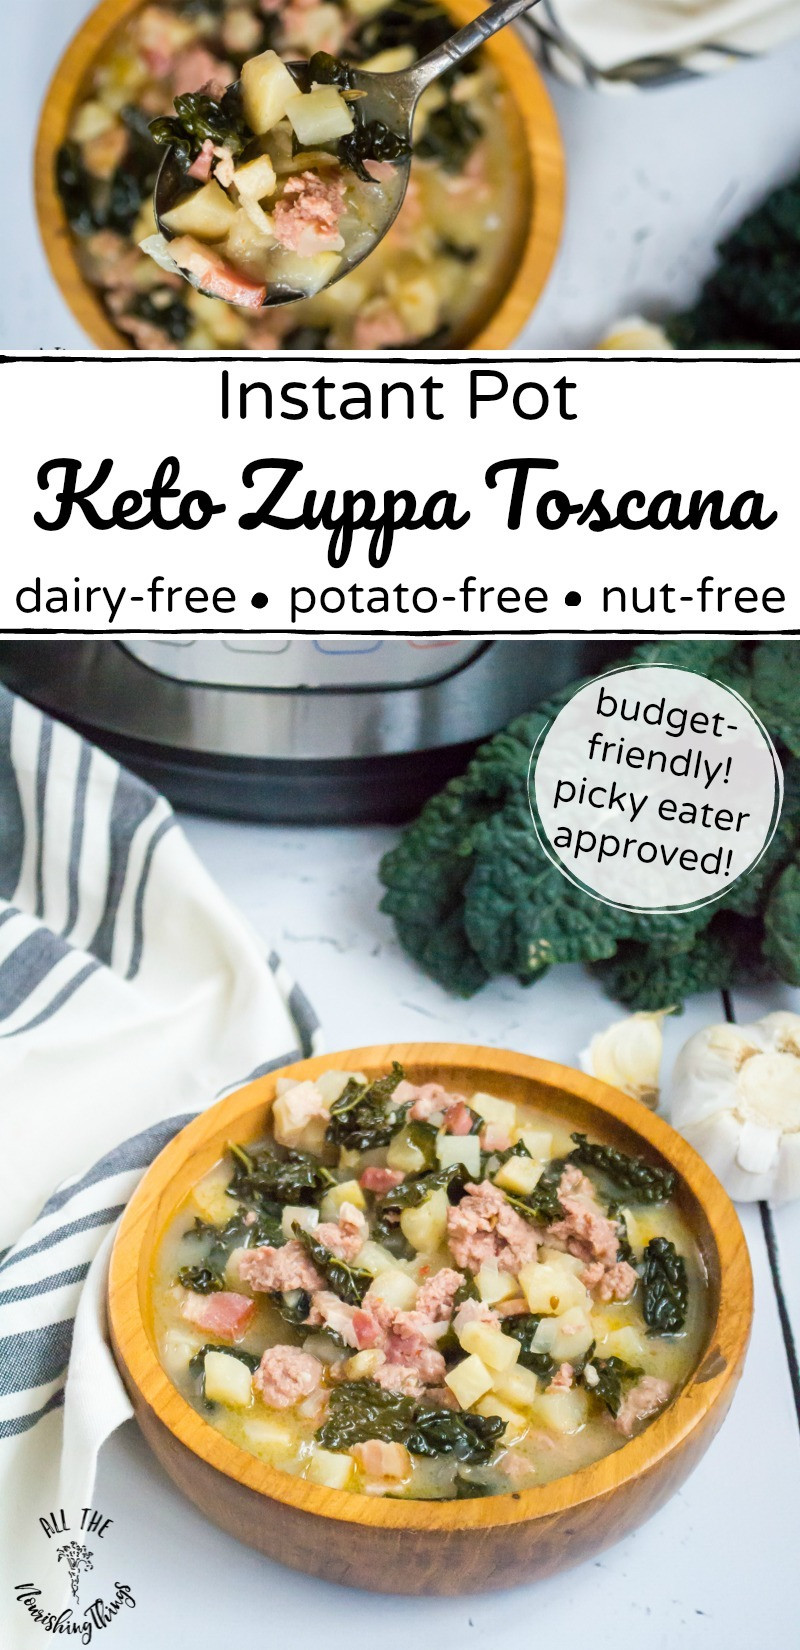 Instant Pot Keto Zuppa Toscana
 Instant Pot Keto Zuppa Toscana dairy free potato free